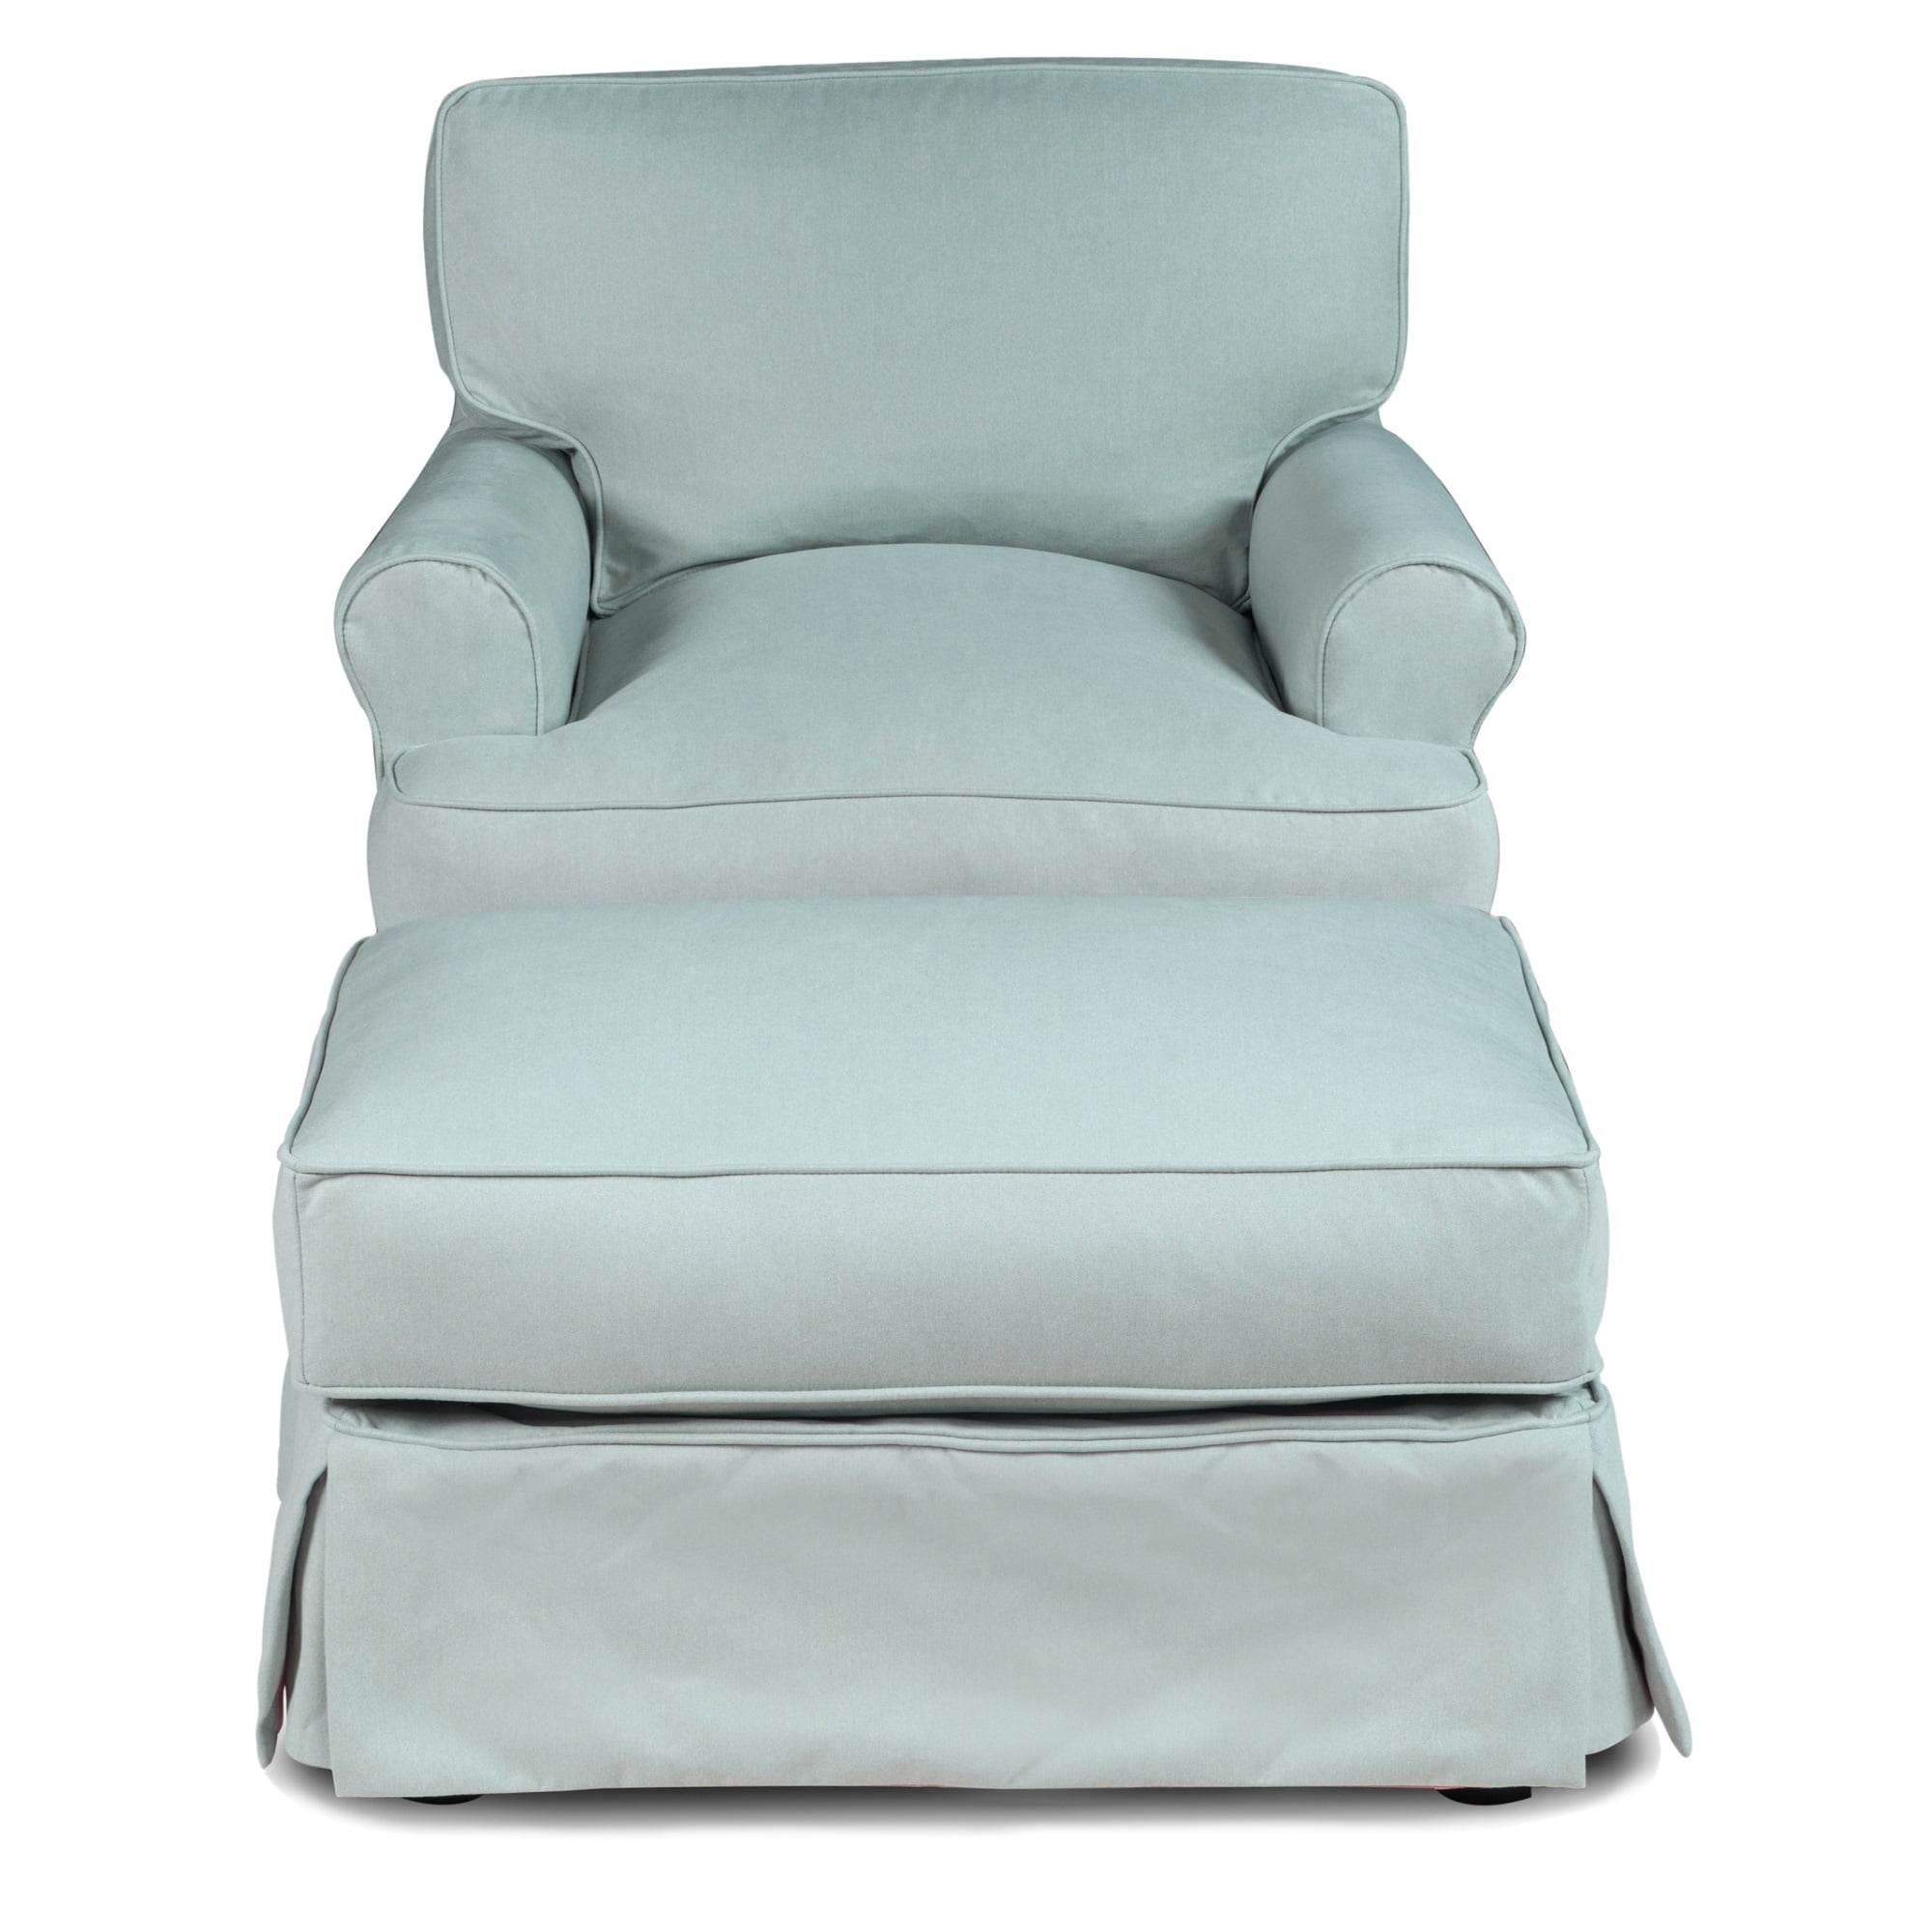 Sunset Trading Horizon Swivel Chair T-Cushion Slip Cover Only Performance White 